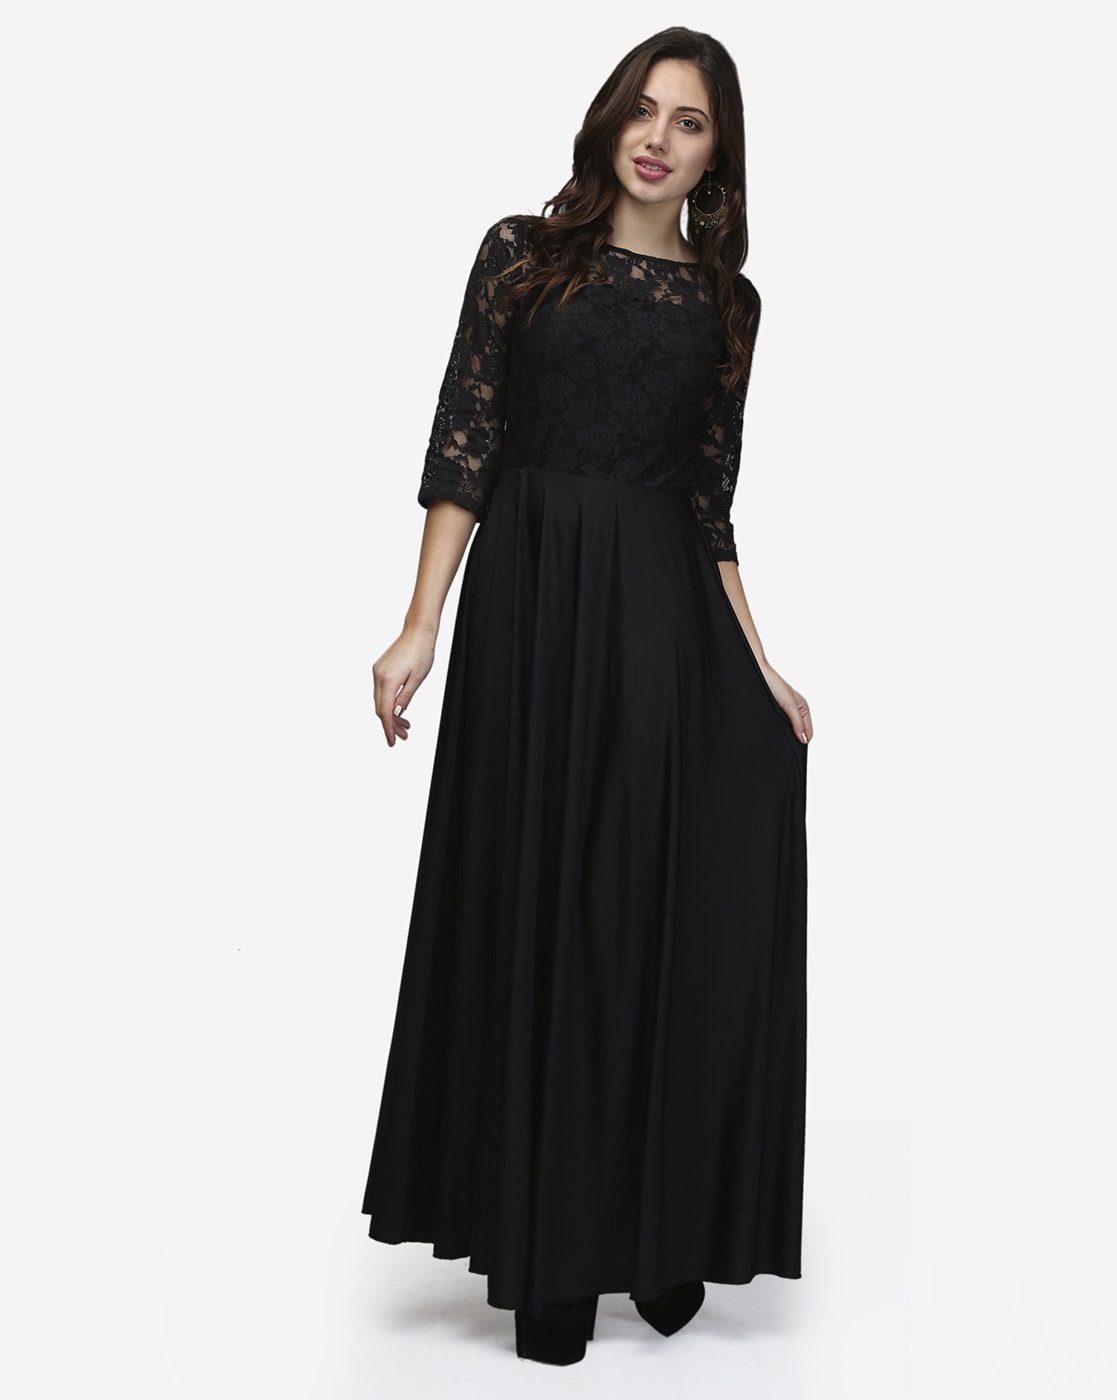 Fancy a Little Black Dress? I should Coco - Fiona Duff